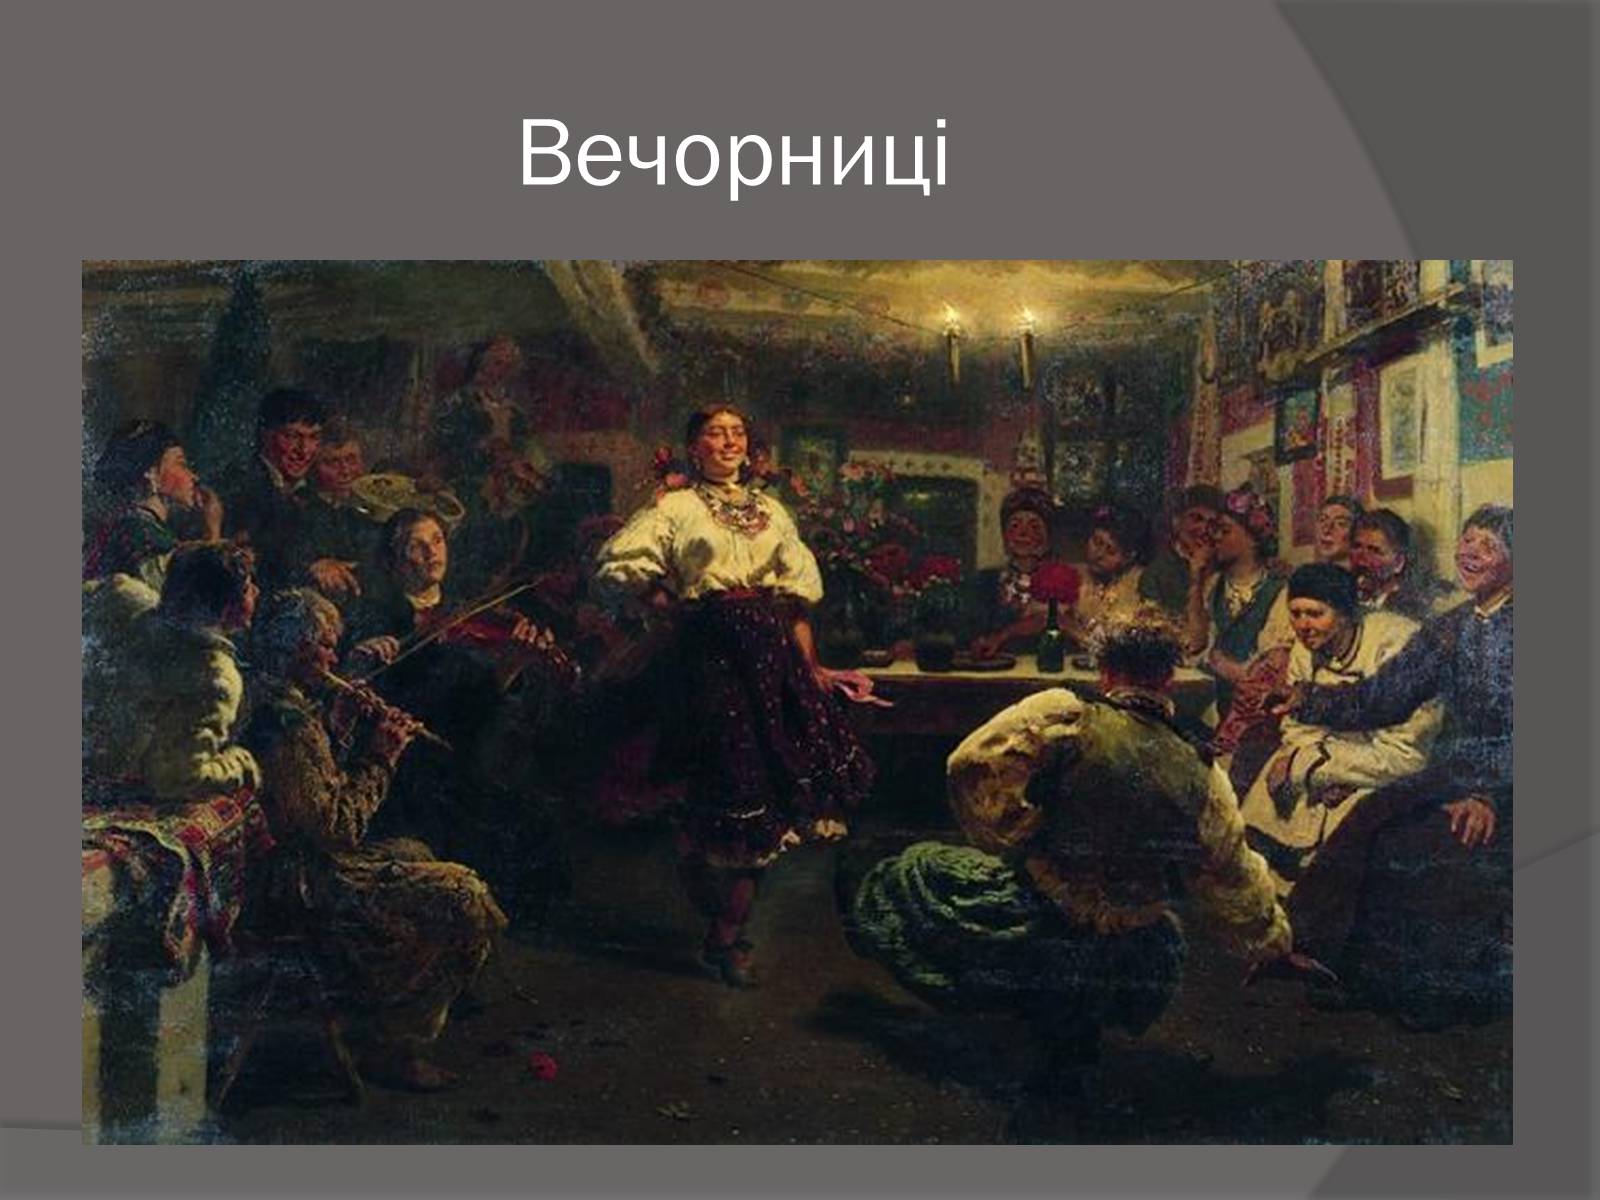 И е репин произведения. Картины Ильи Ефимовича Репина. Вечорницы 1881 картина Репина.